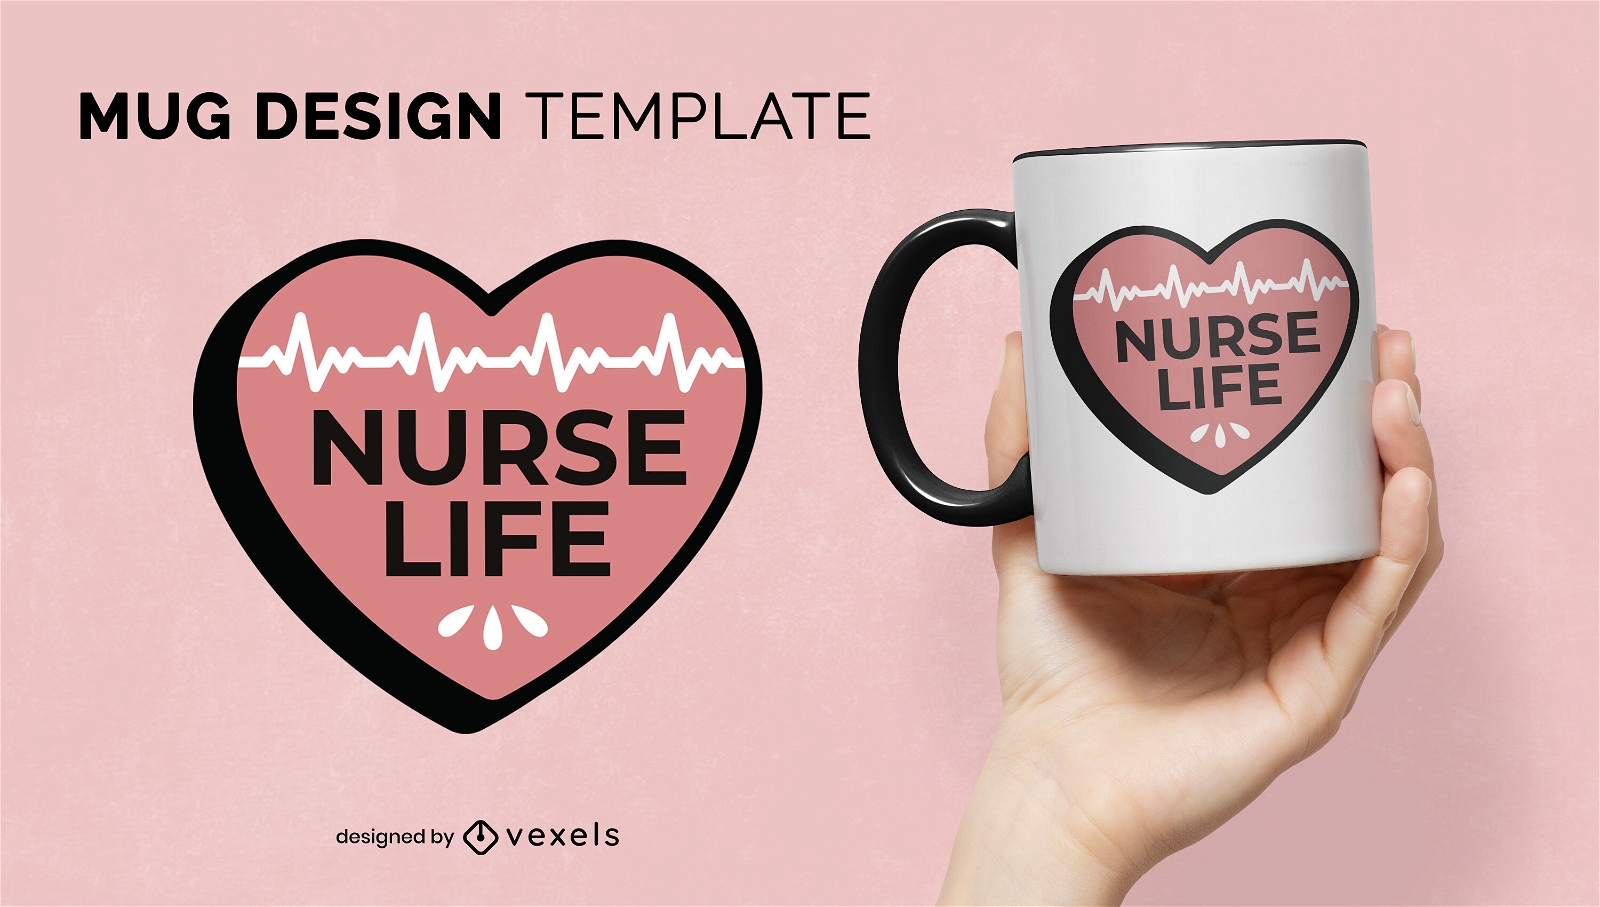 Nurse life mug design